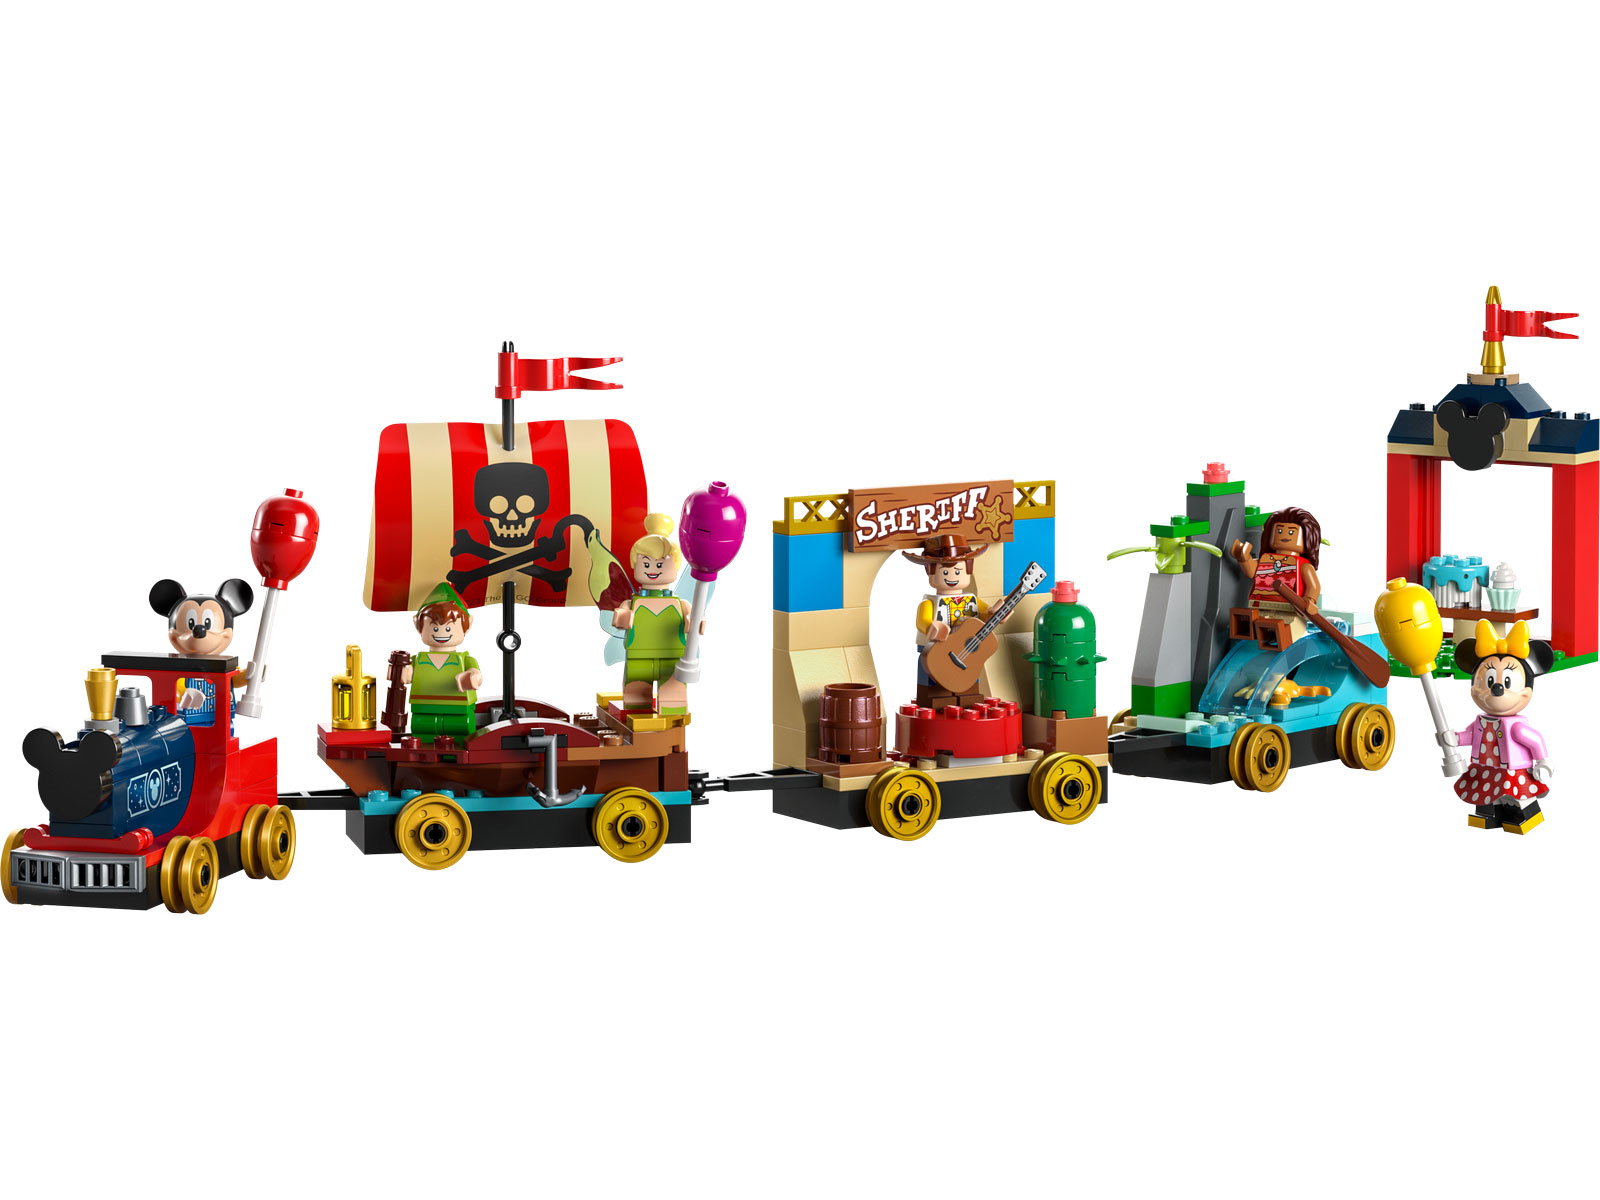 LEGO® Disney 43212 - Disney Geburtstagszug